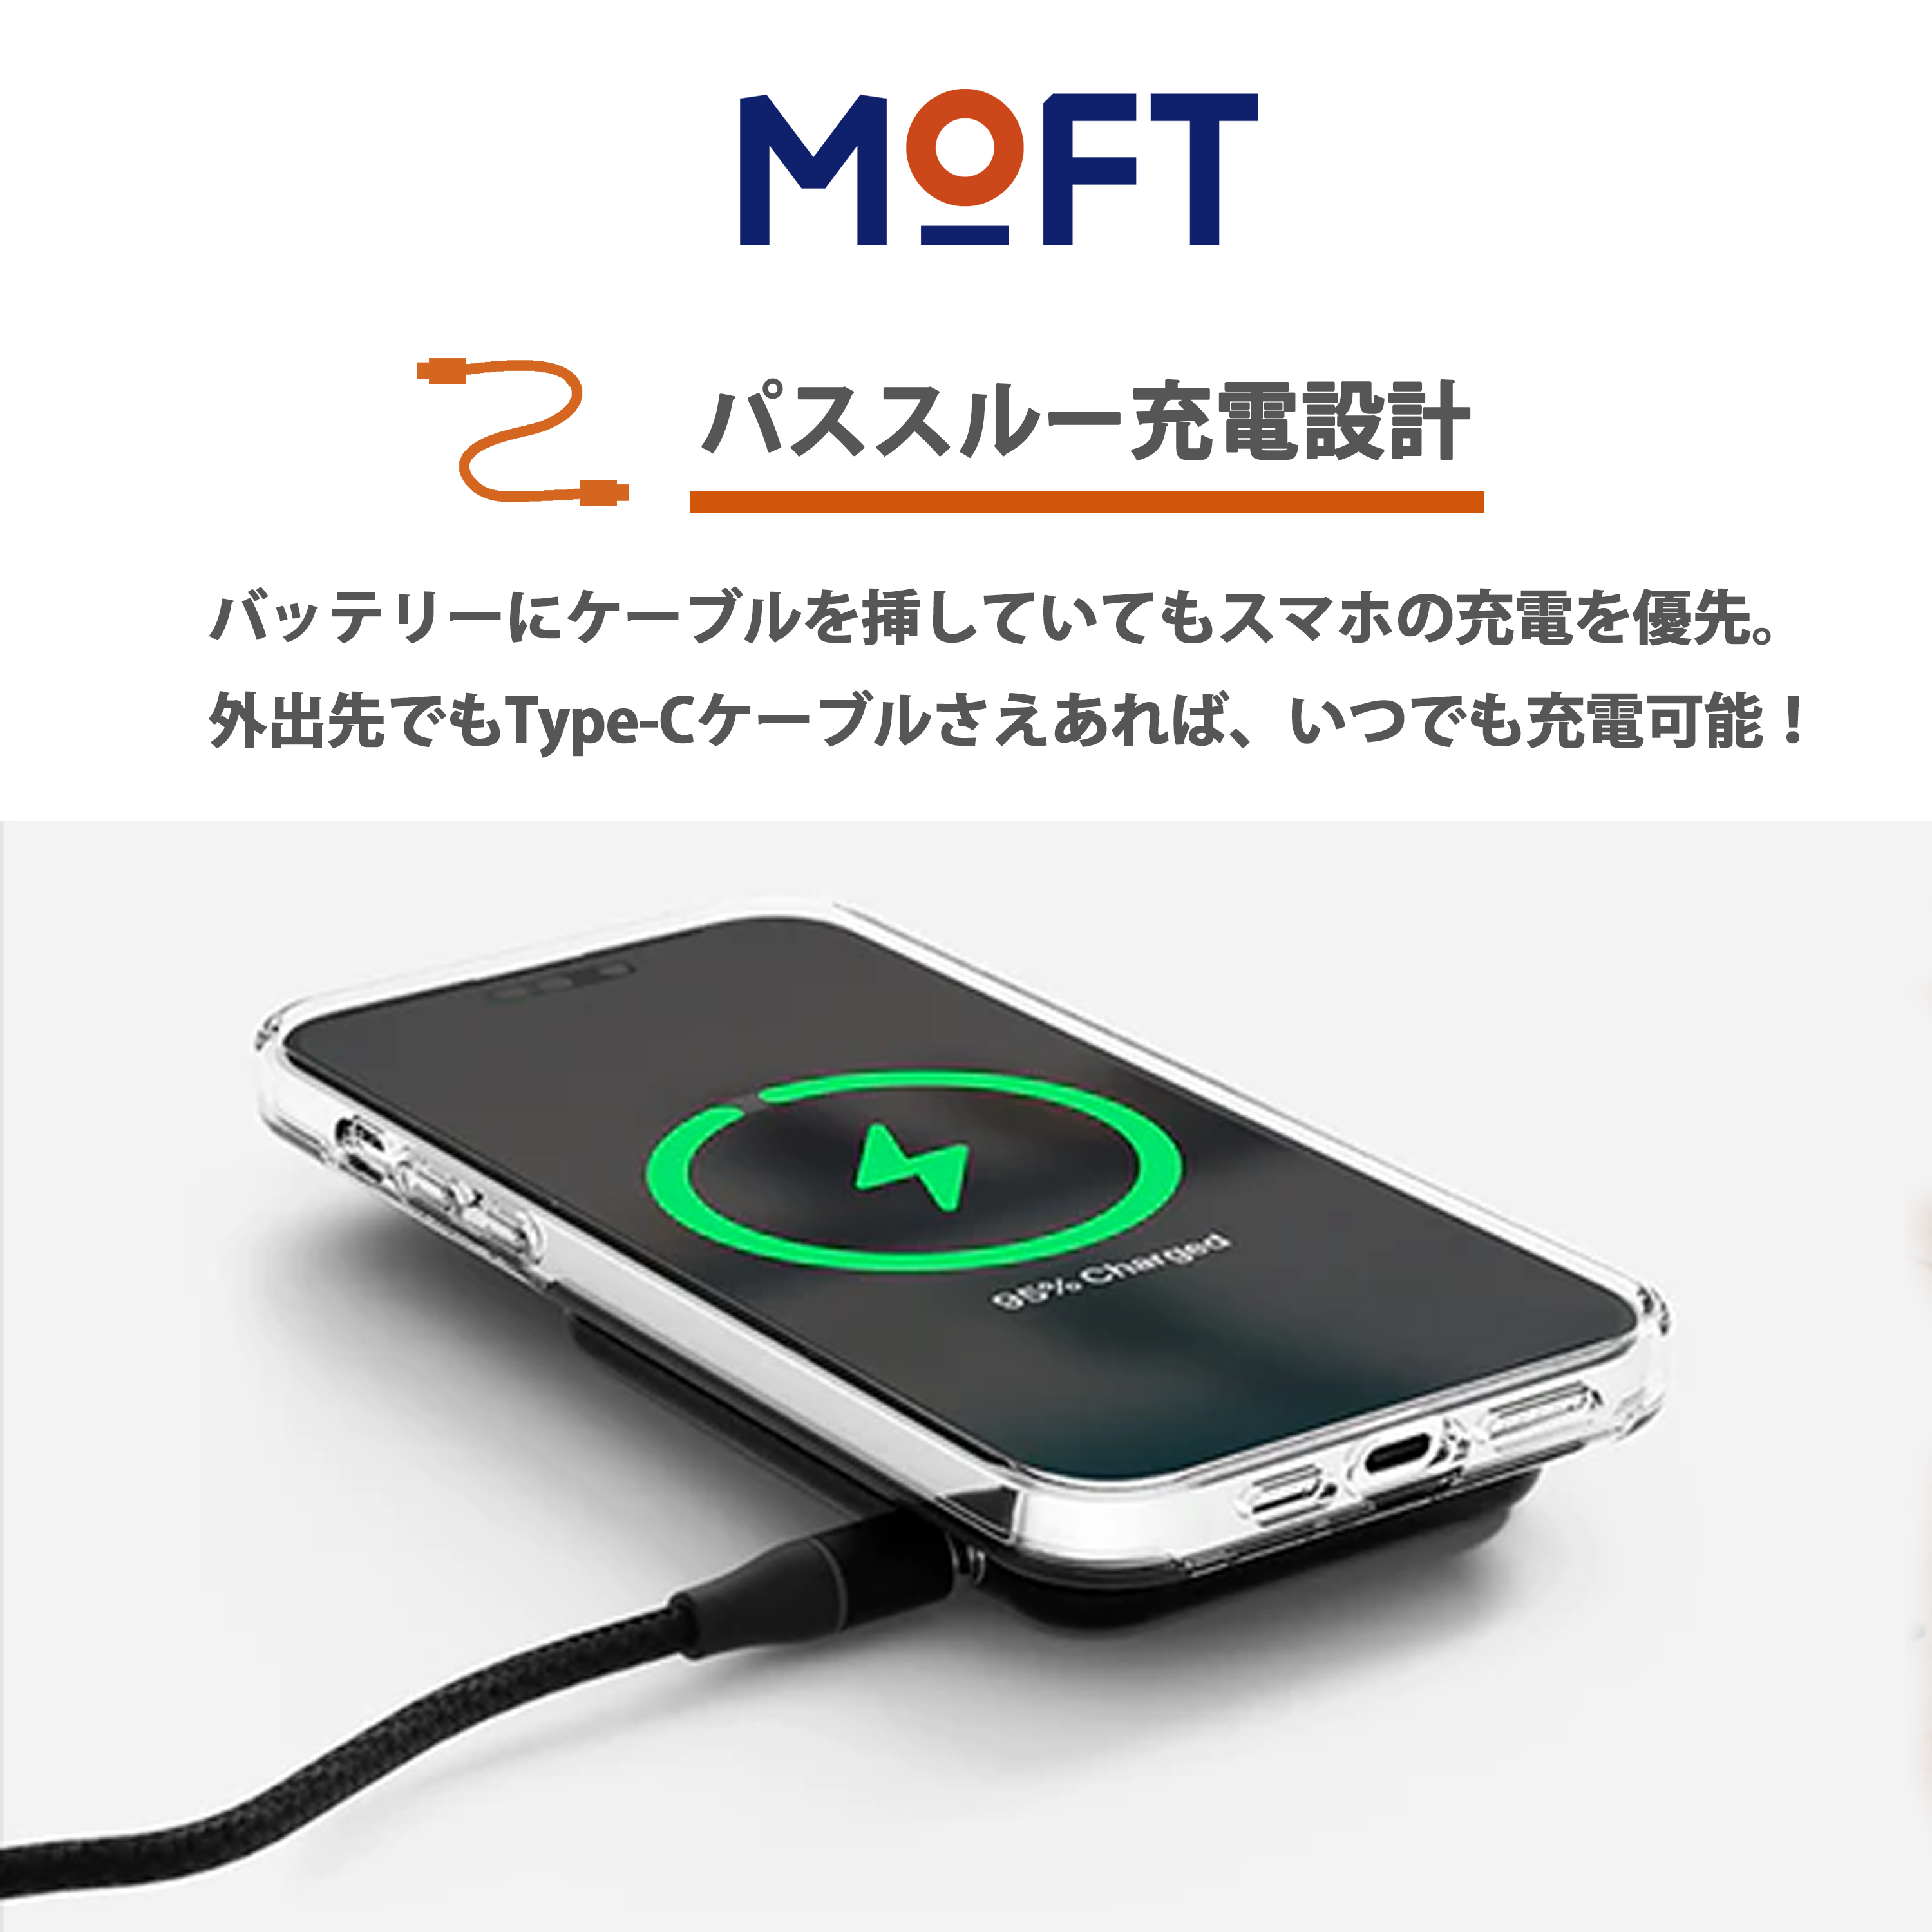 MOFT Snap バッテリーパック モバイルバッテリー ワイヤレス充電 